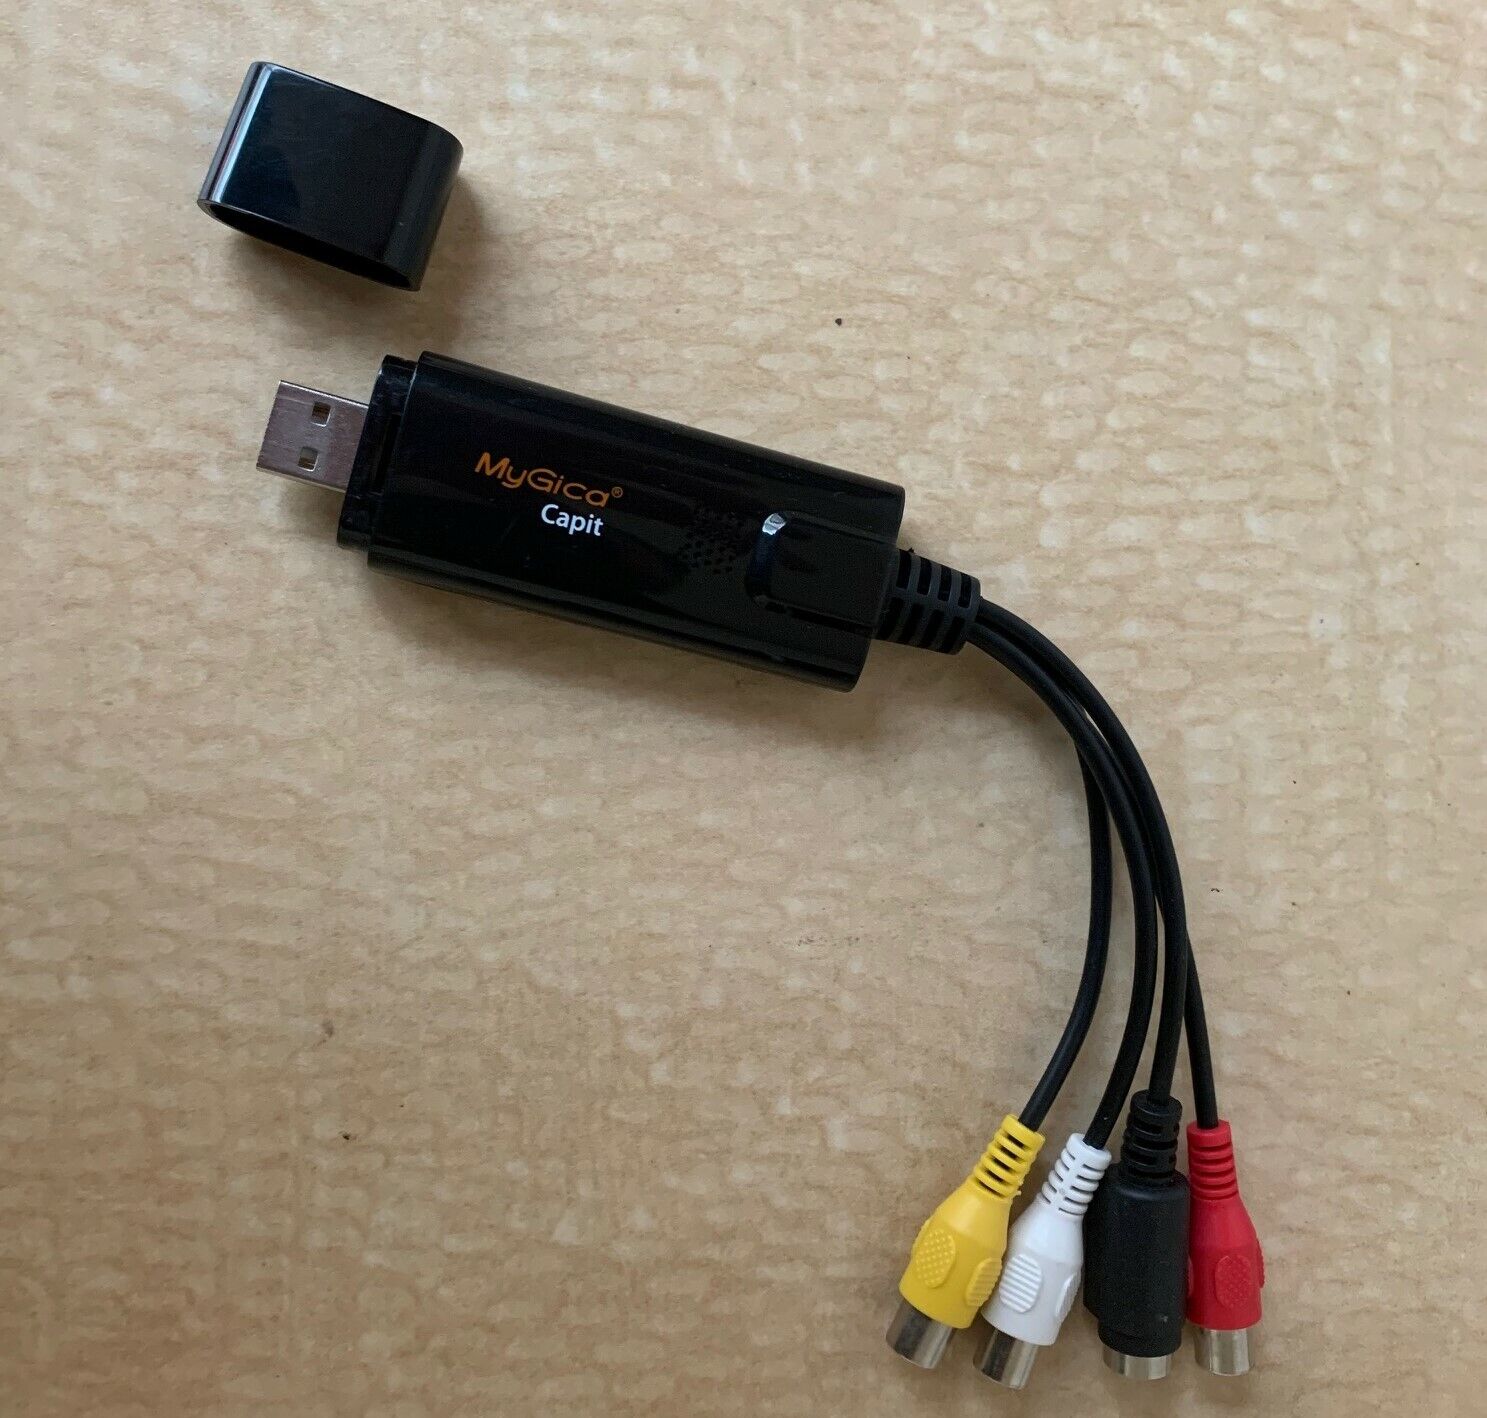 USB-2.0 Video Capture Device, MyGica Brand, for Windows